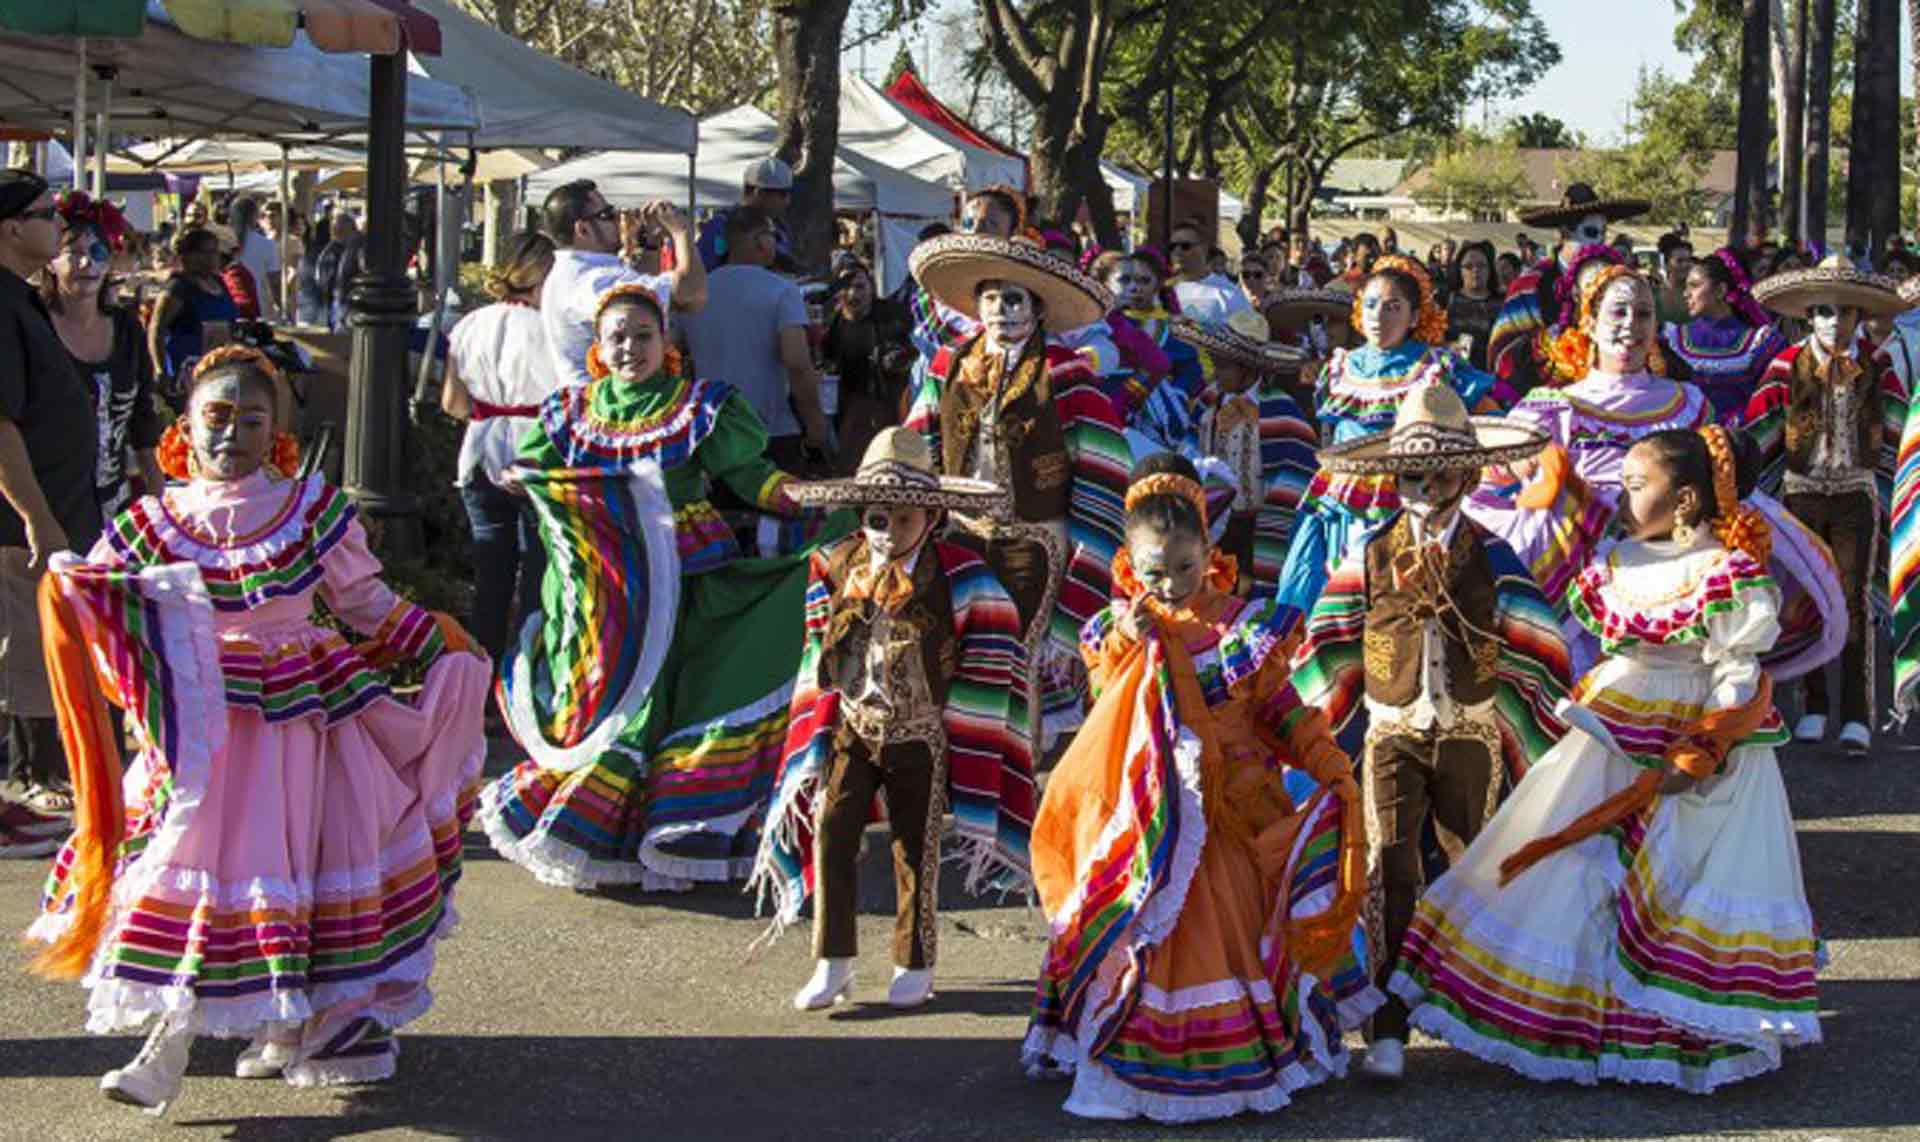 People in Costumes and Makeup Celebrating Dia De Los Muertos